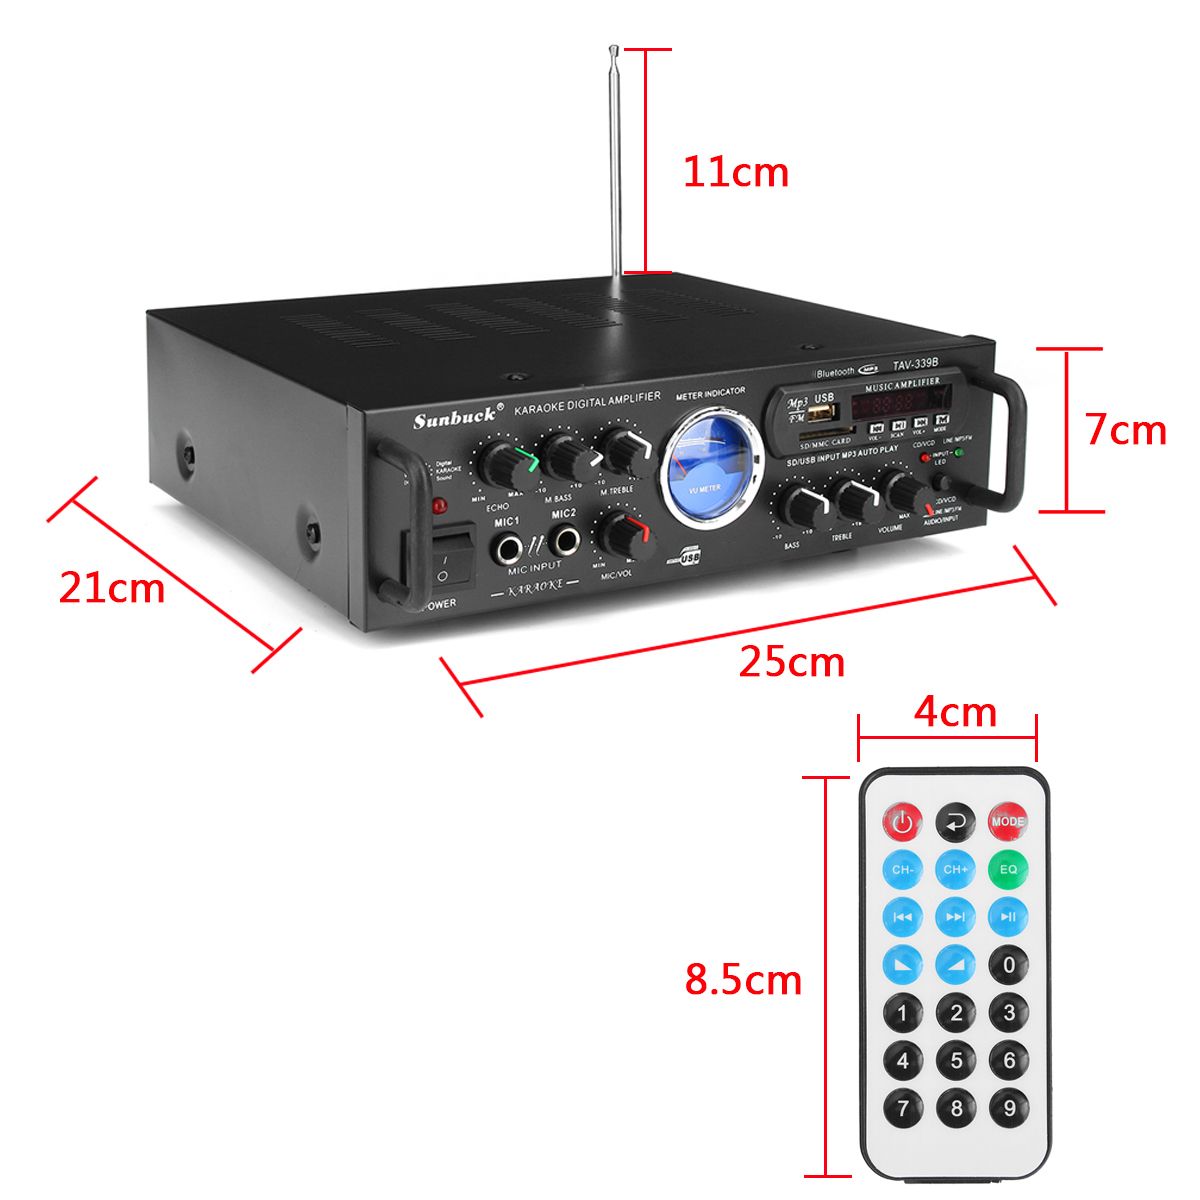 Sunbuck-TAV-339B-110V-bluetooth-600w-Karaoke-Power-Stero-Amplifier-With-VU-Meter-FM-2-Ch-USB-SD-1252354